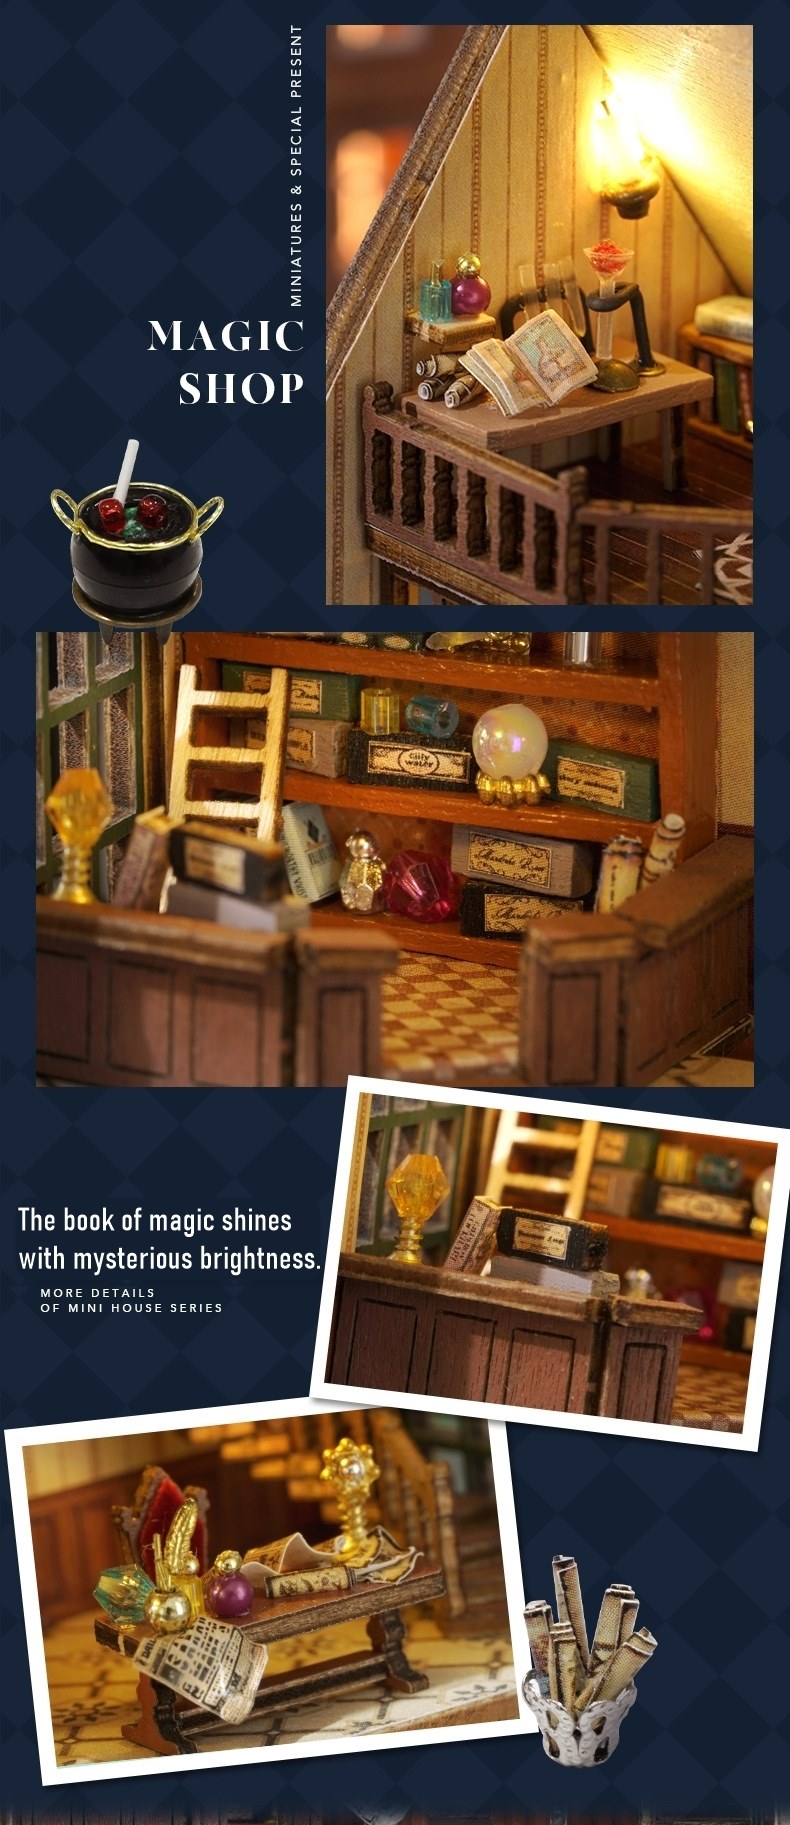 Magic Shop DIY Dollhouse Kit, Harry Potter Inspired Miniature House, Magic theme diorama, mini house series -DETAILS 2